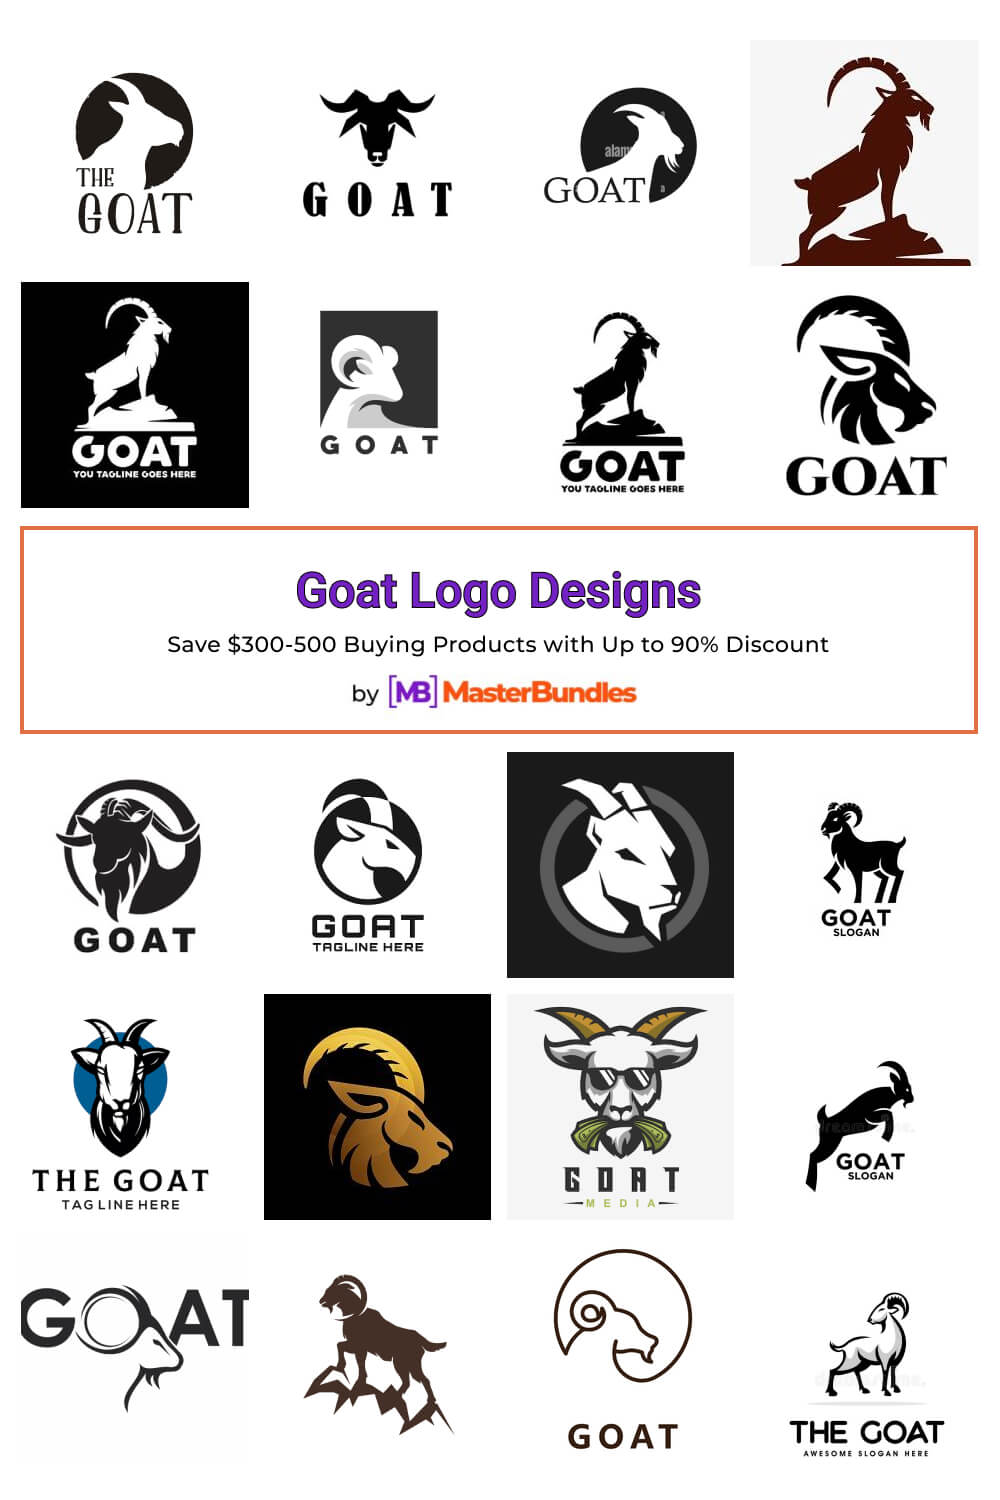 goat logo designs pinterest image.